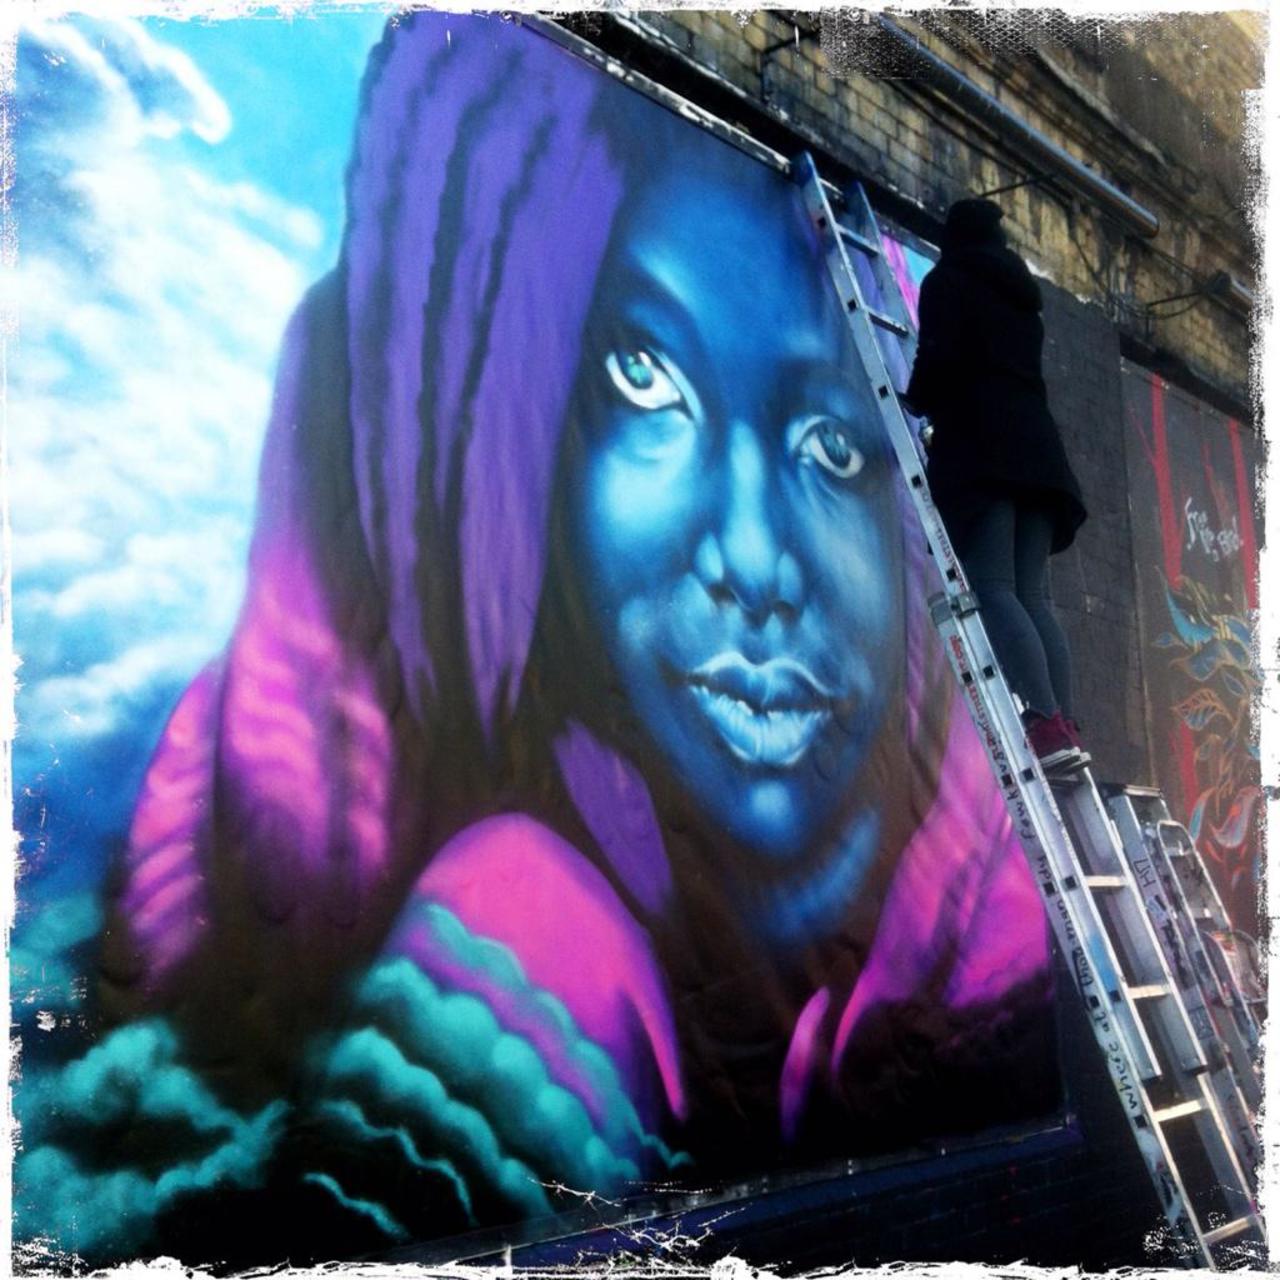 Beautiful work by @illuzina 

#art @FemmeFierceUK #graffiti #streetart @globalstreetart @GraffitiFeed http://t.co/q9hcIfVRuN